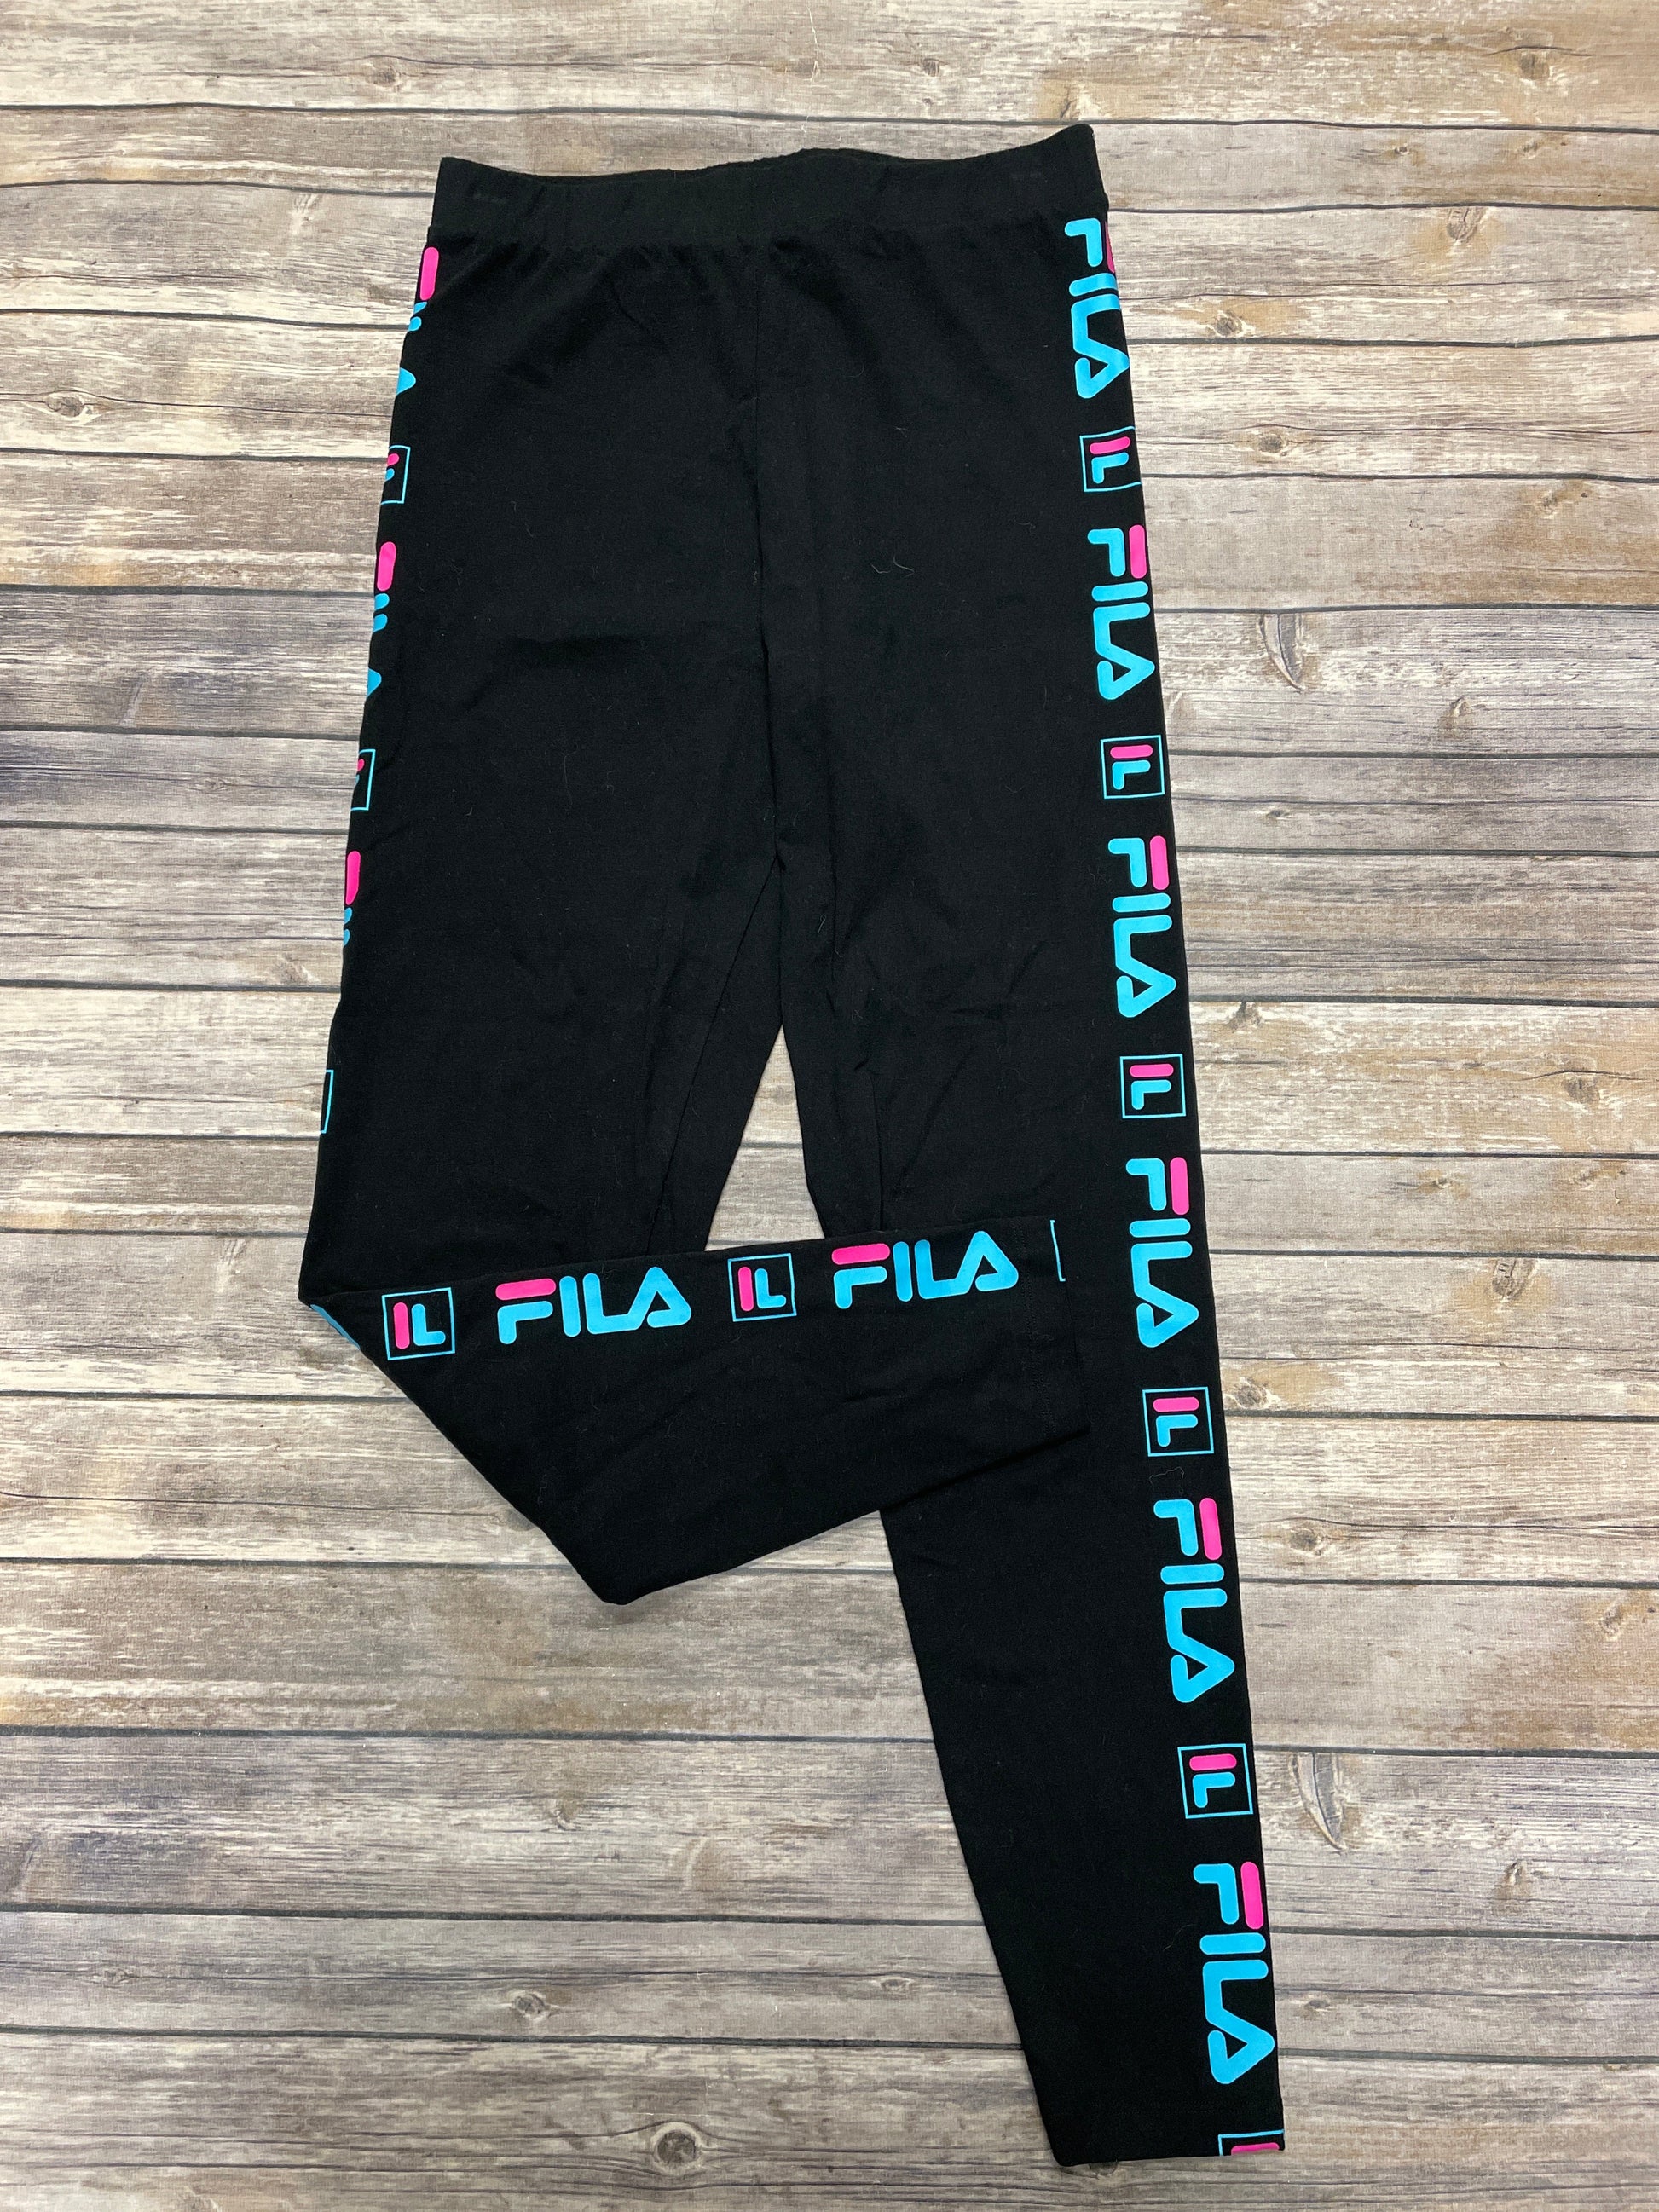 Athletic Pants By Fila Size: L